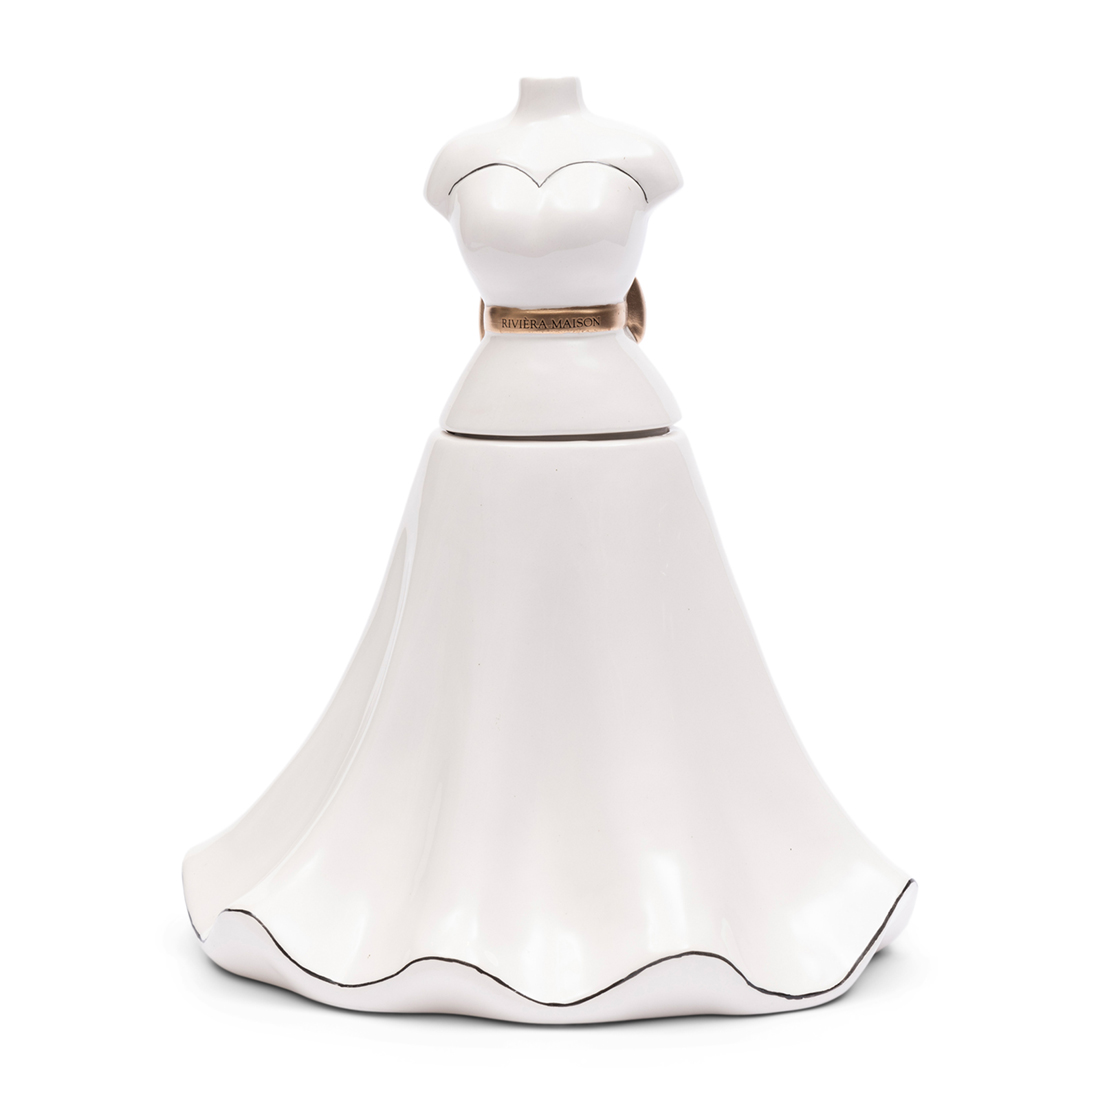 Riviera Maison Voorraadpot Jurk Vorm - RM Lovely Dress Storage Jar - Wit